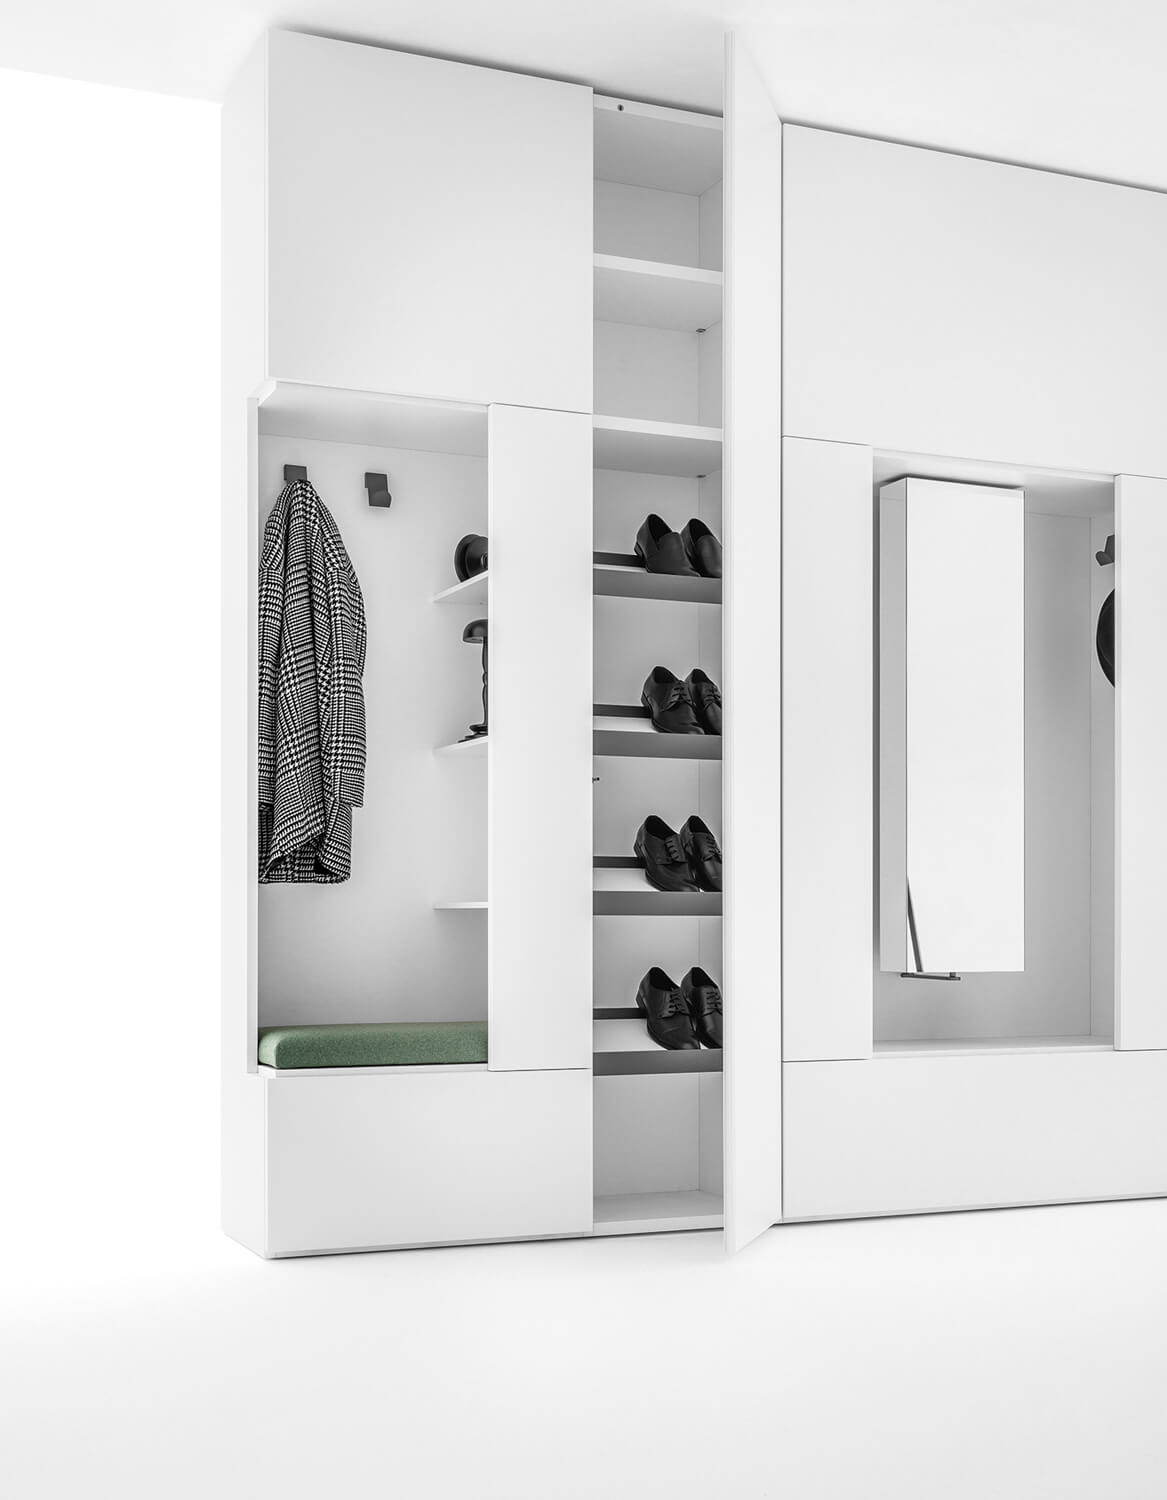 Foyer closet solution featuring a bench, coat hangers, “pocket-emptying” shelves, hidden shoe rack, and the revolving mirror module.